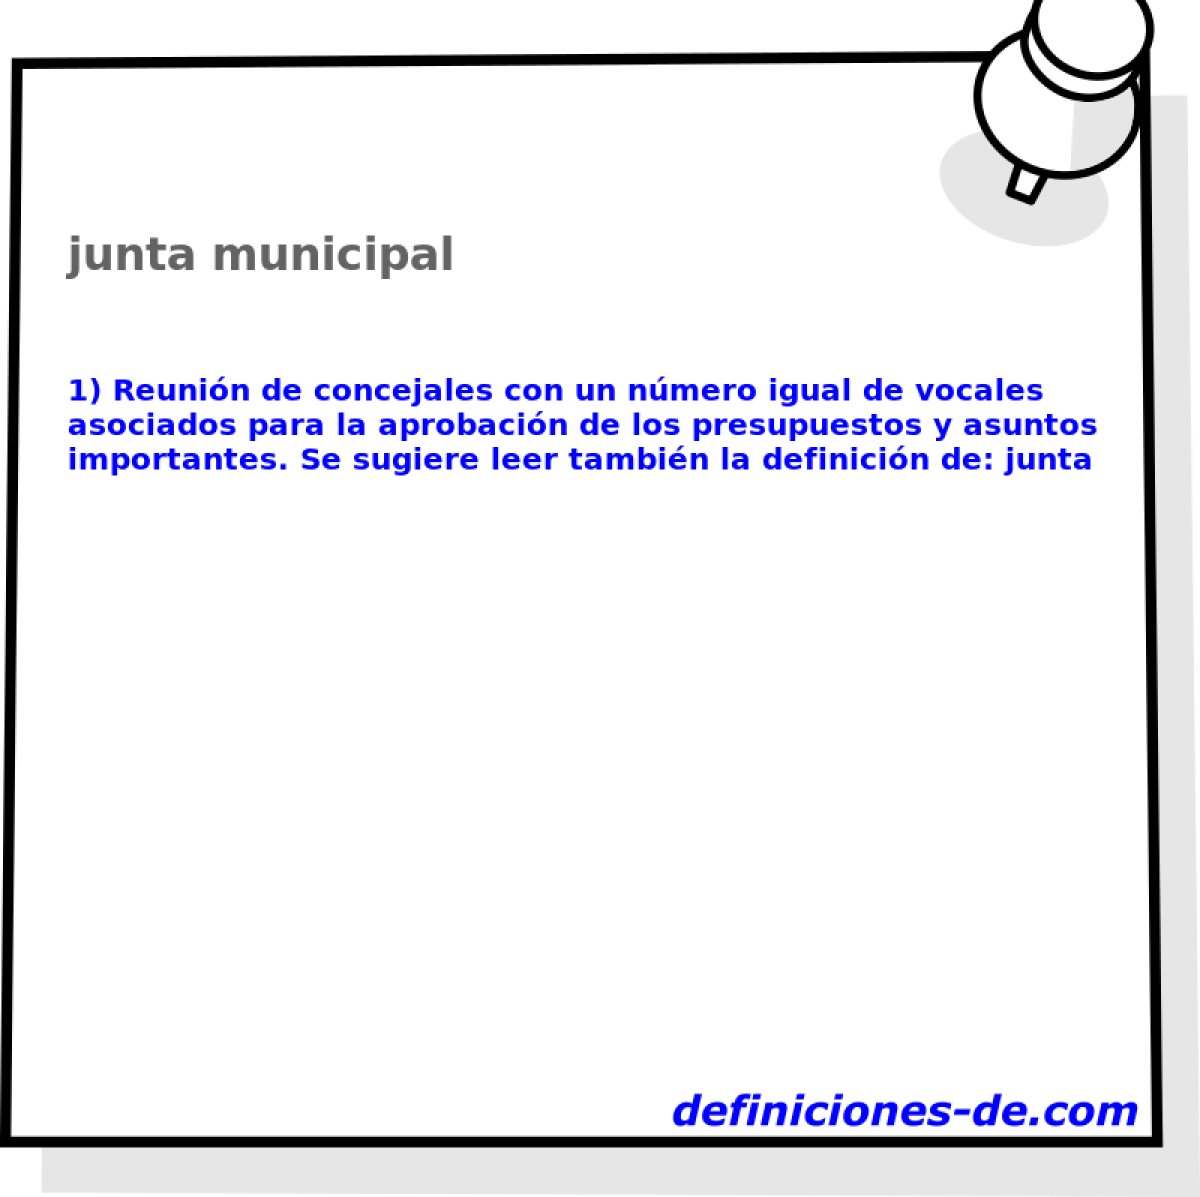 junta municipal 